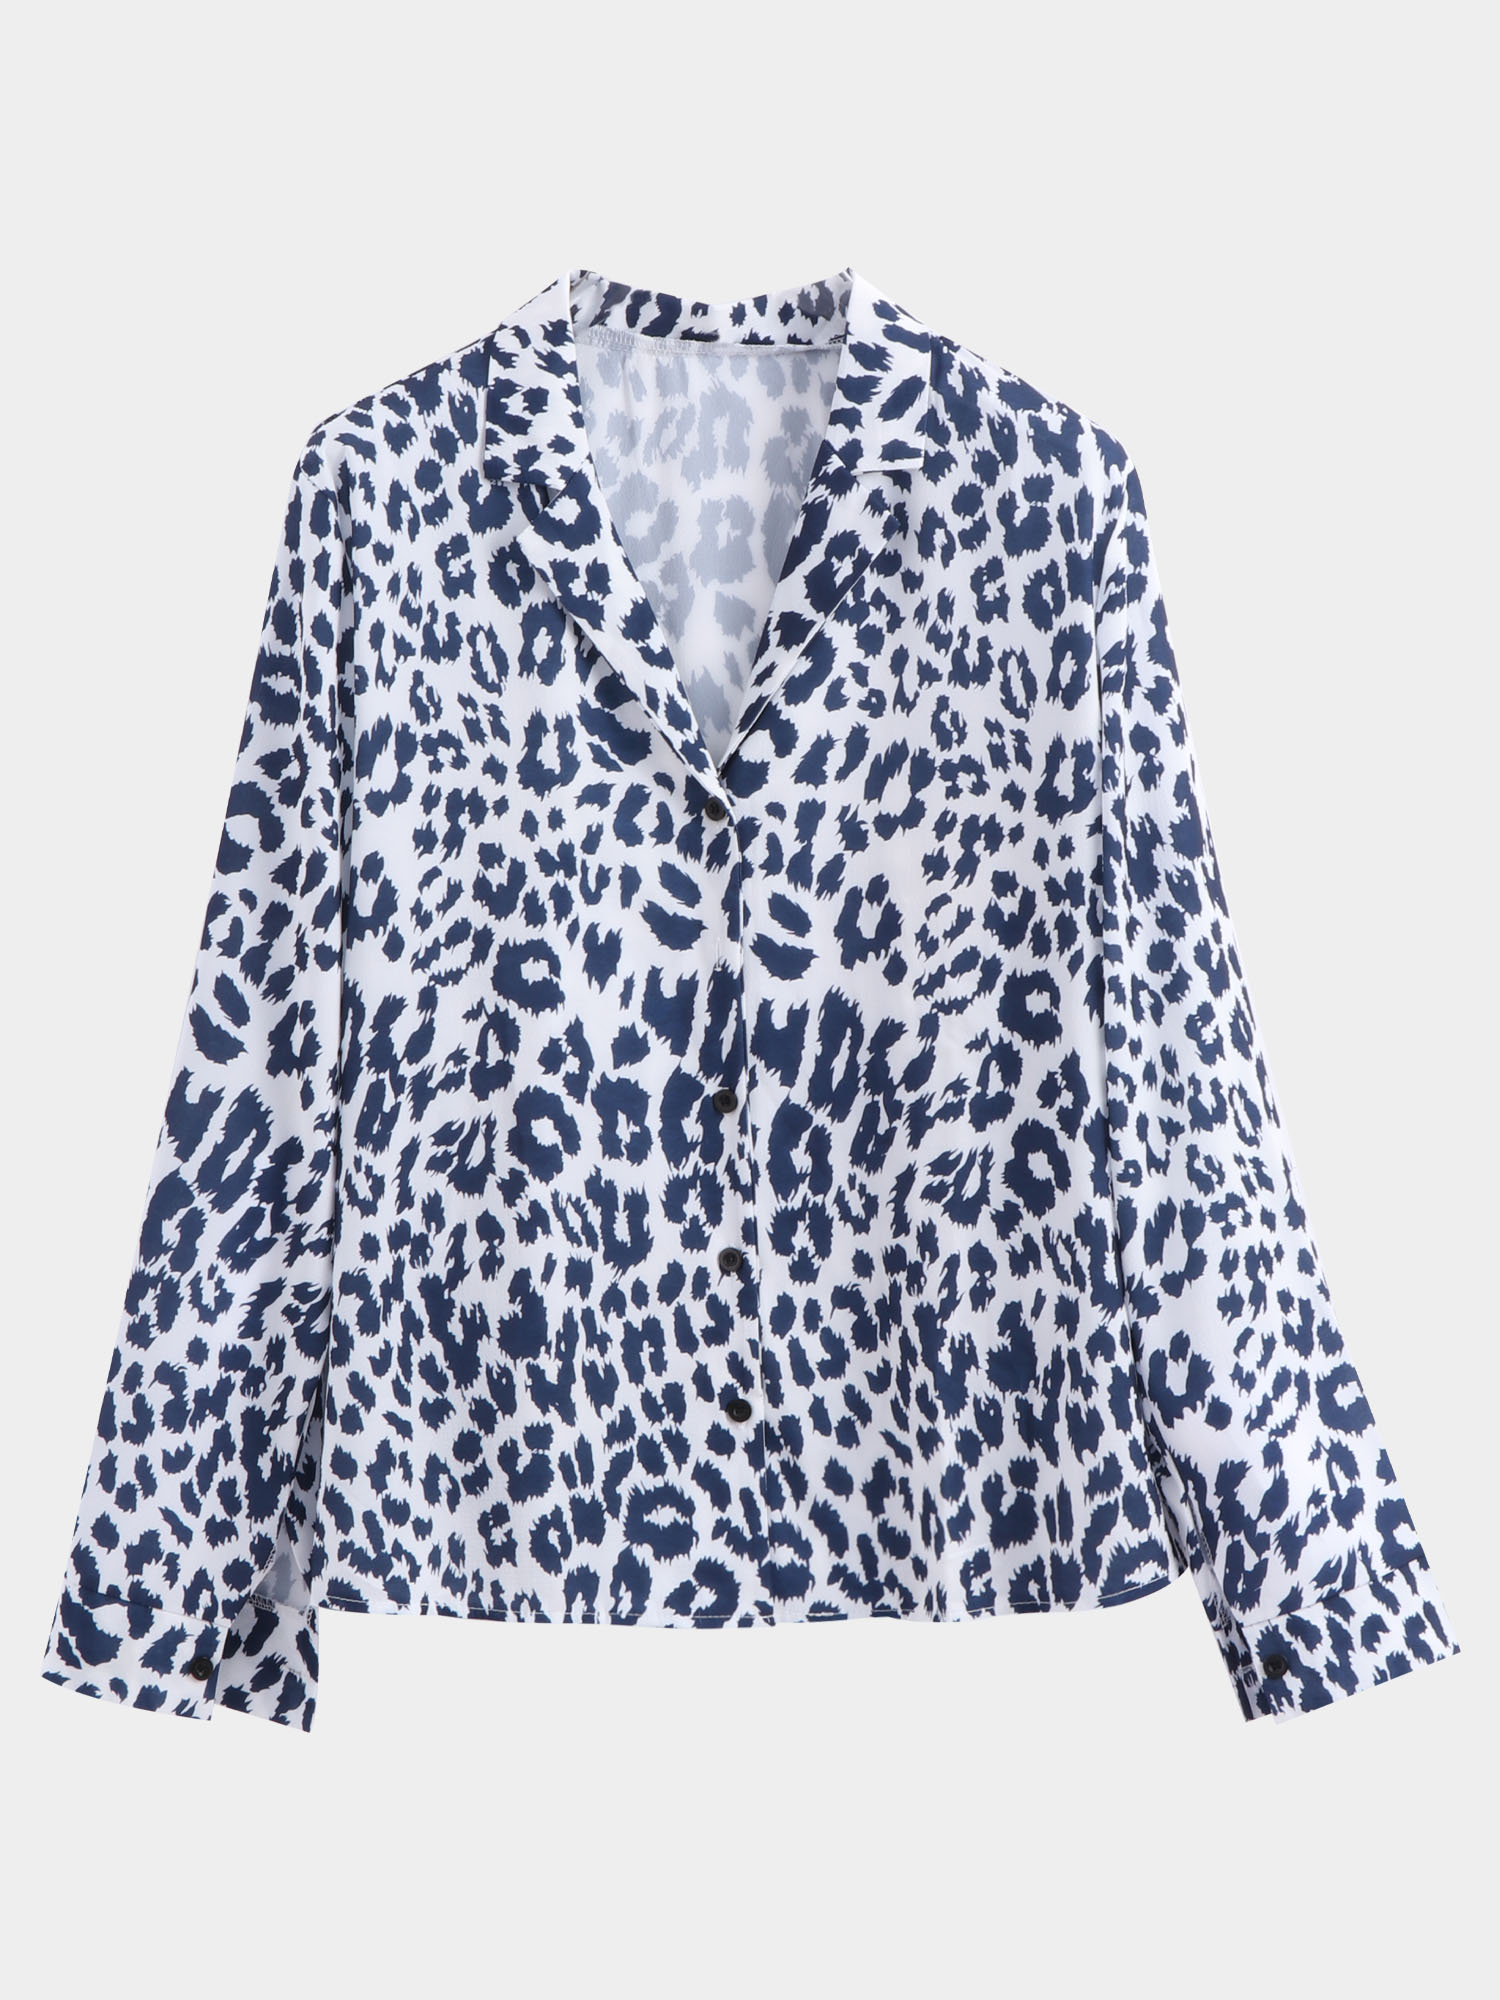 Midsize Key Pieces Leopard Printed Shirt | Hemwave - Midsize Fashion